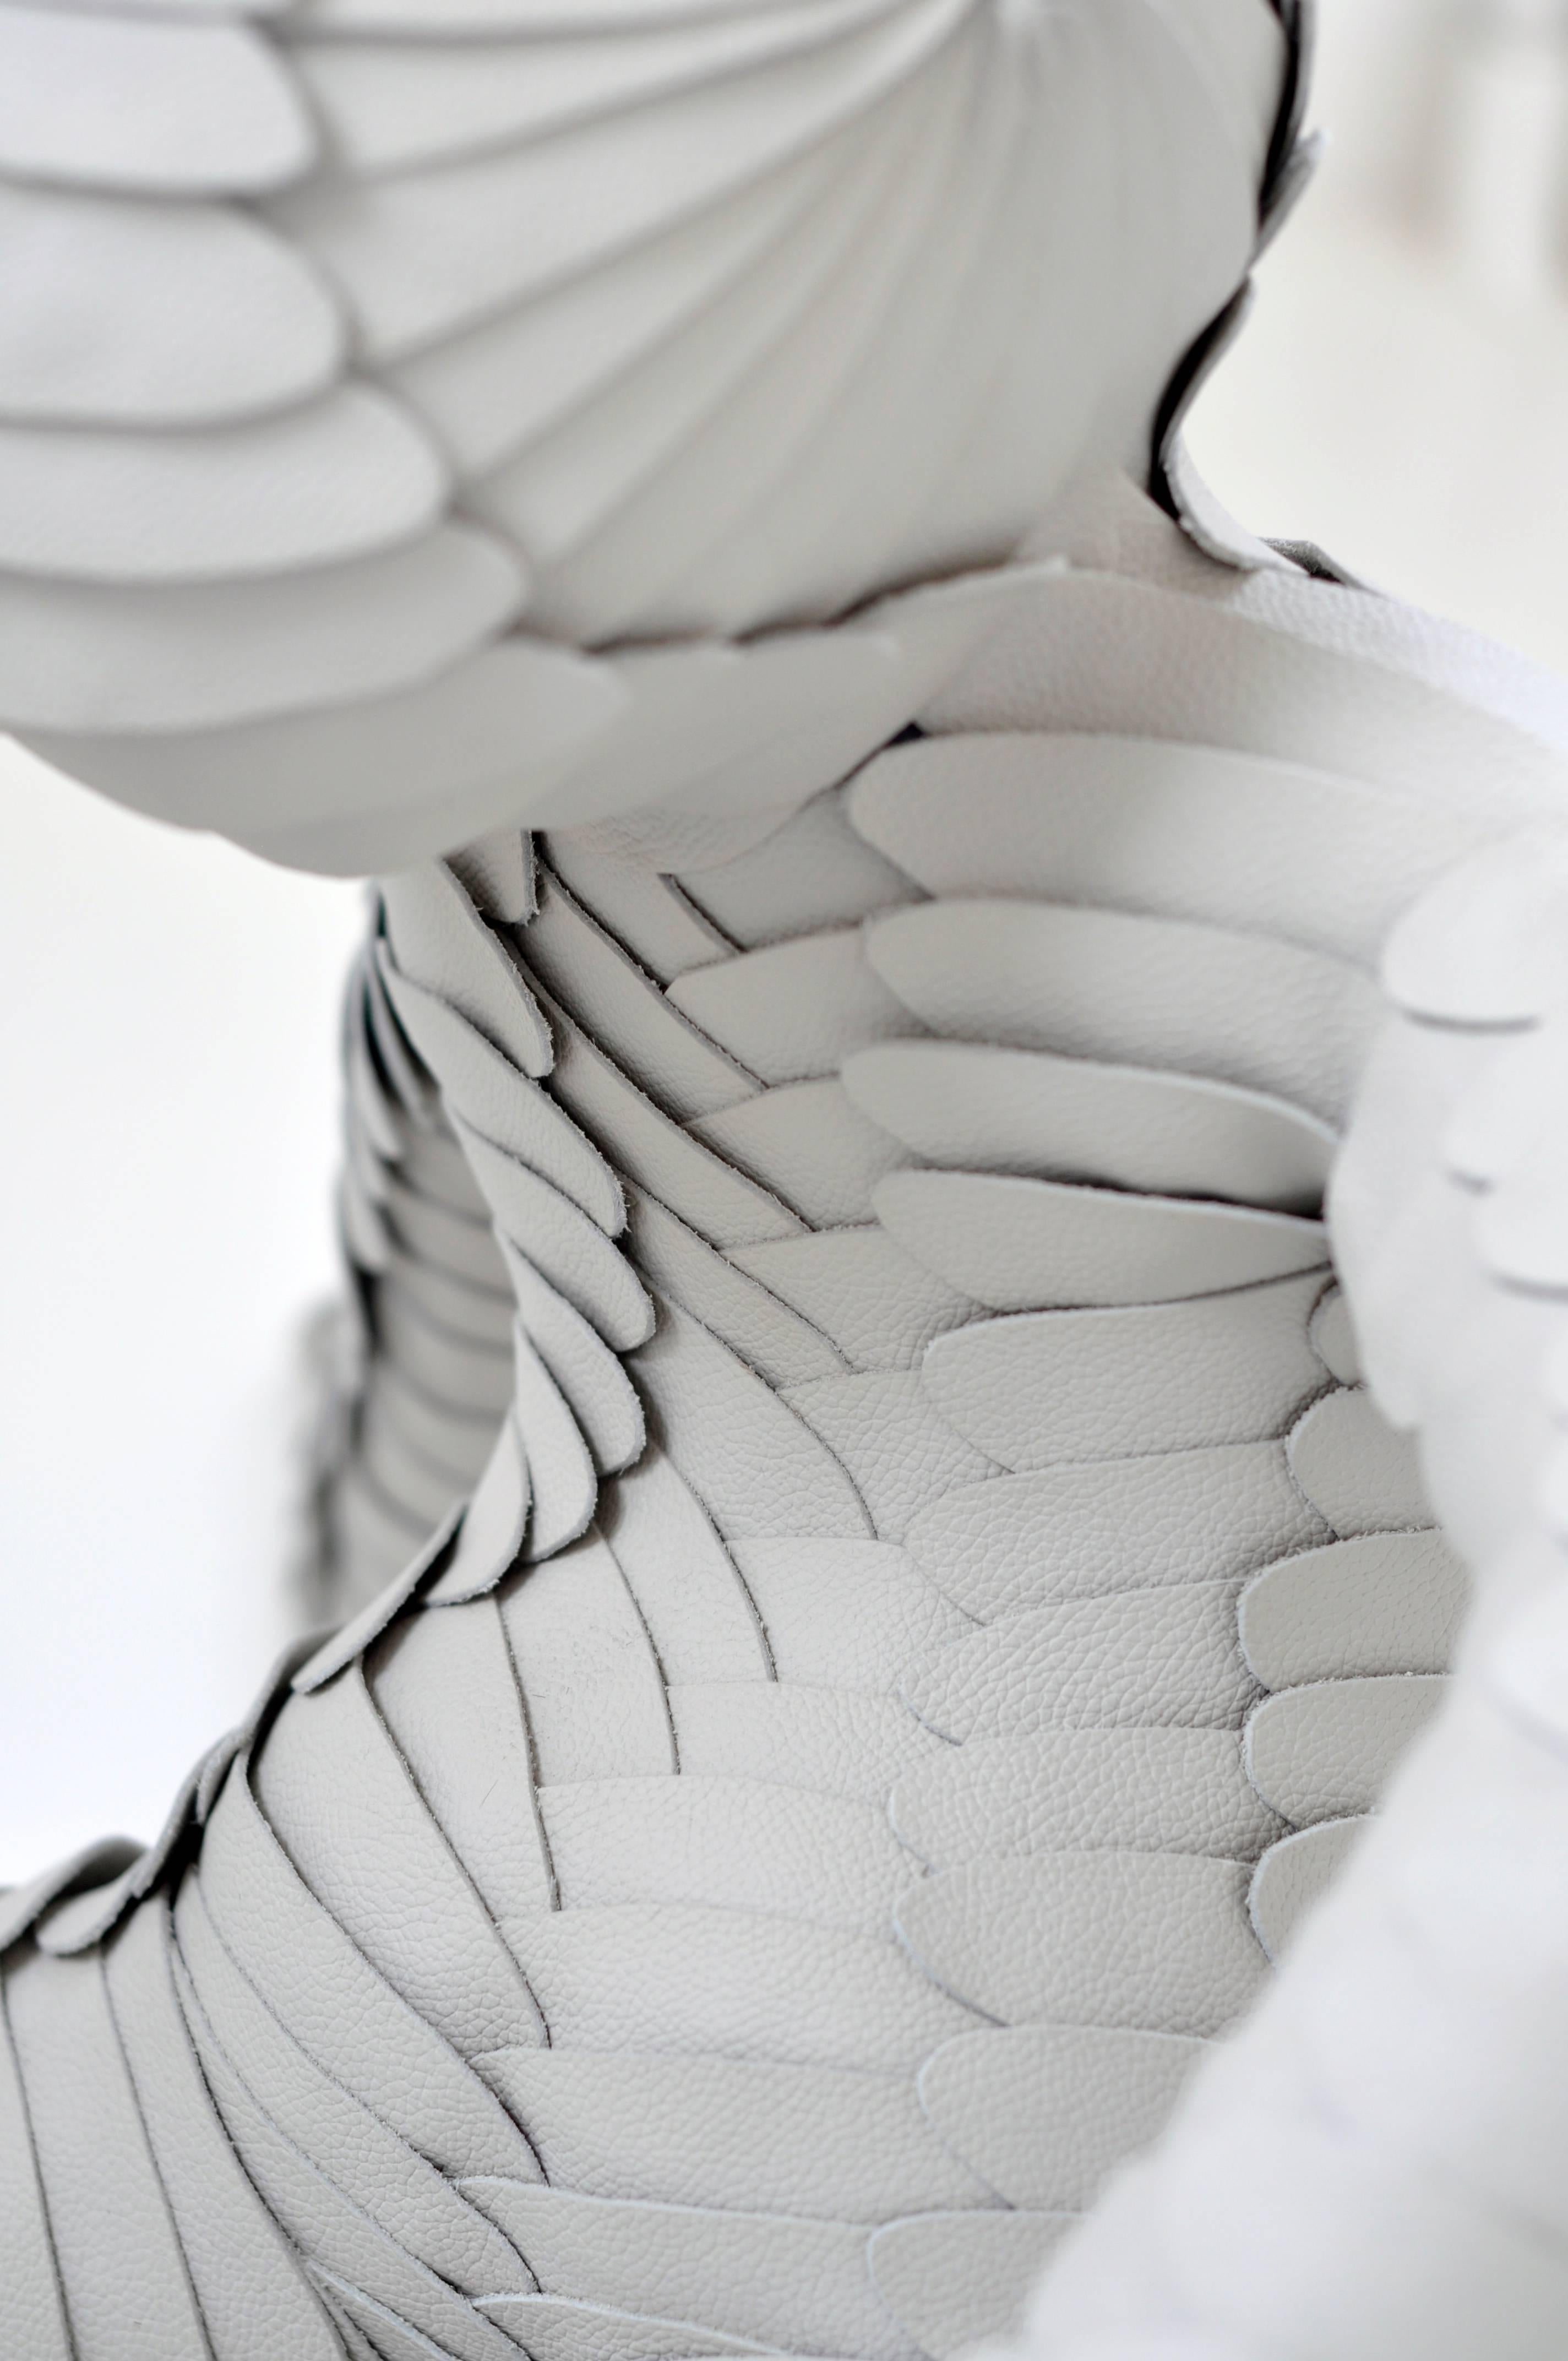 White leather figurative nude sculpture - Modern Sculpture by Sabi van Hemert